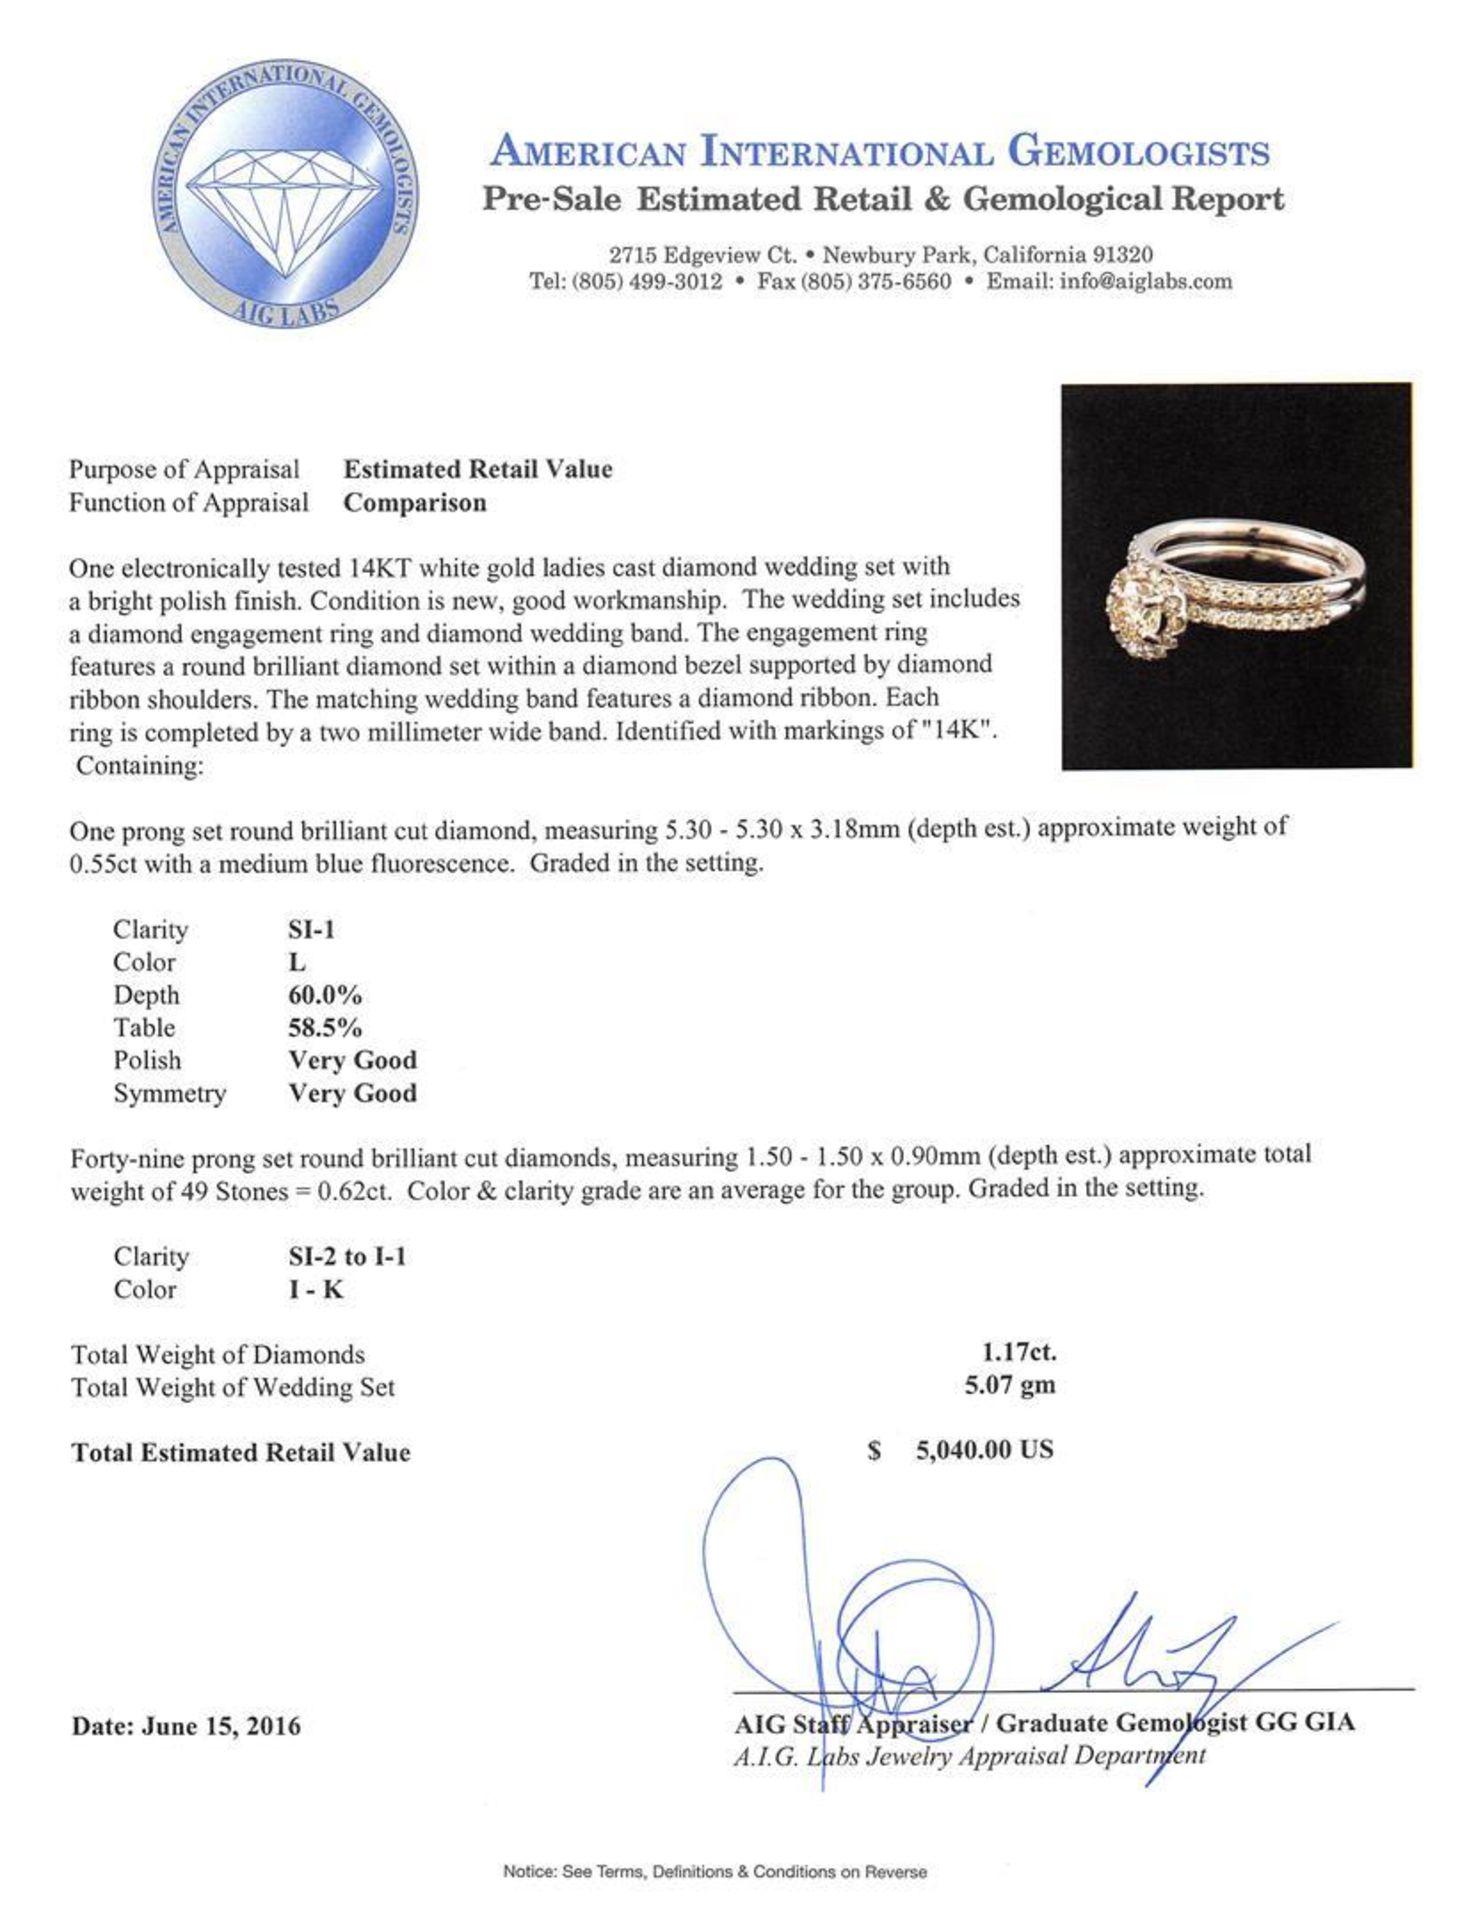 1.17ctw Diamond Wedding Ring Set - 14KT White Gold - Image 4 of 4